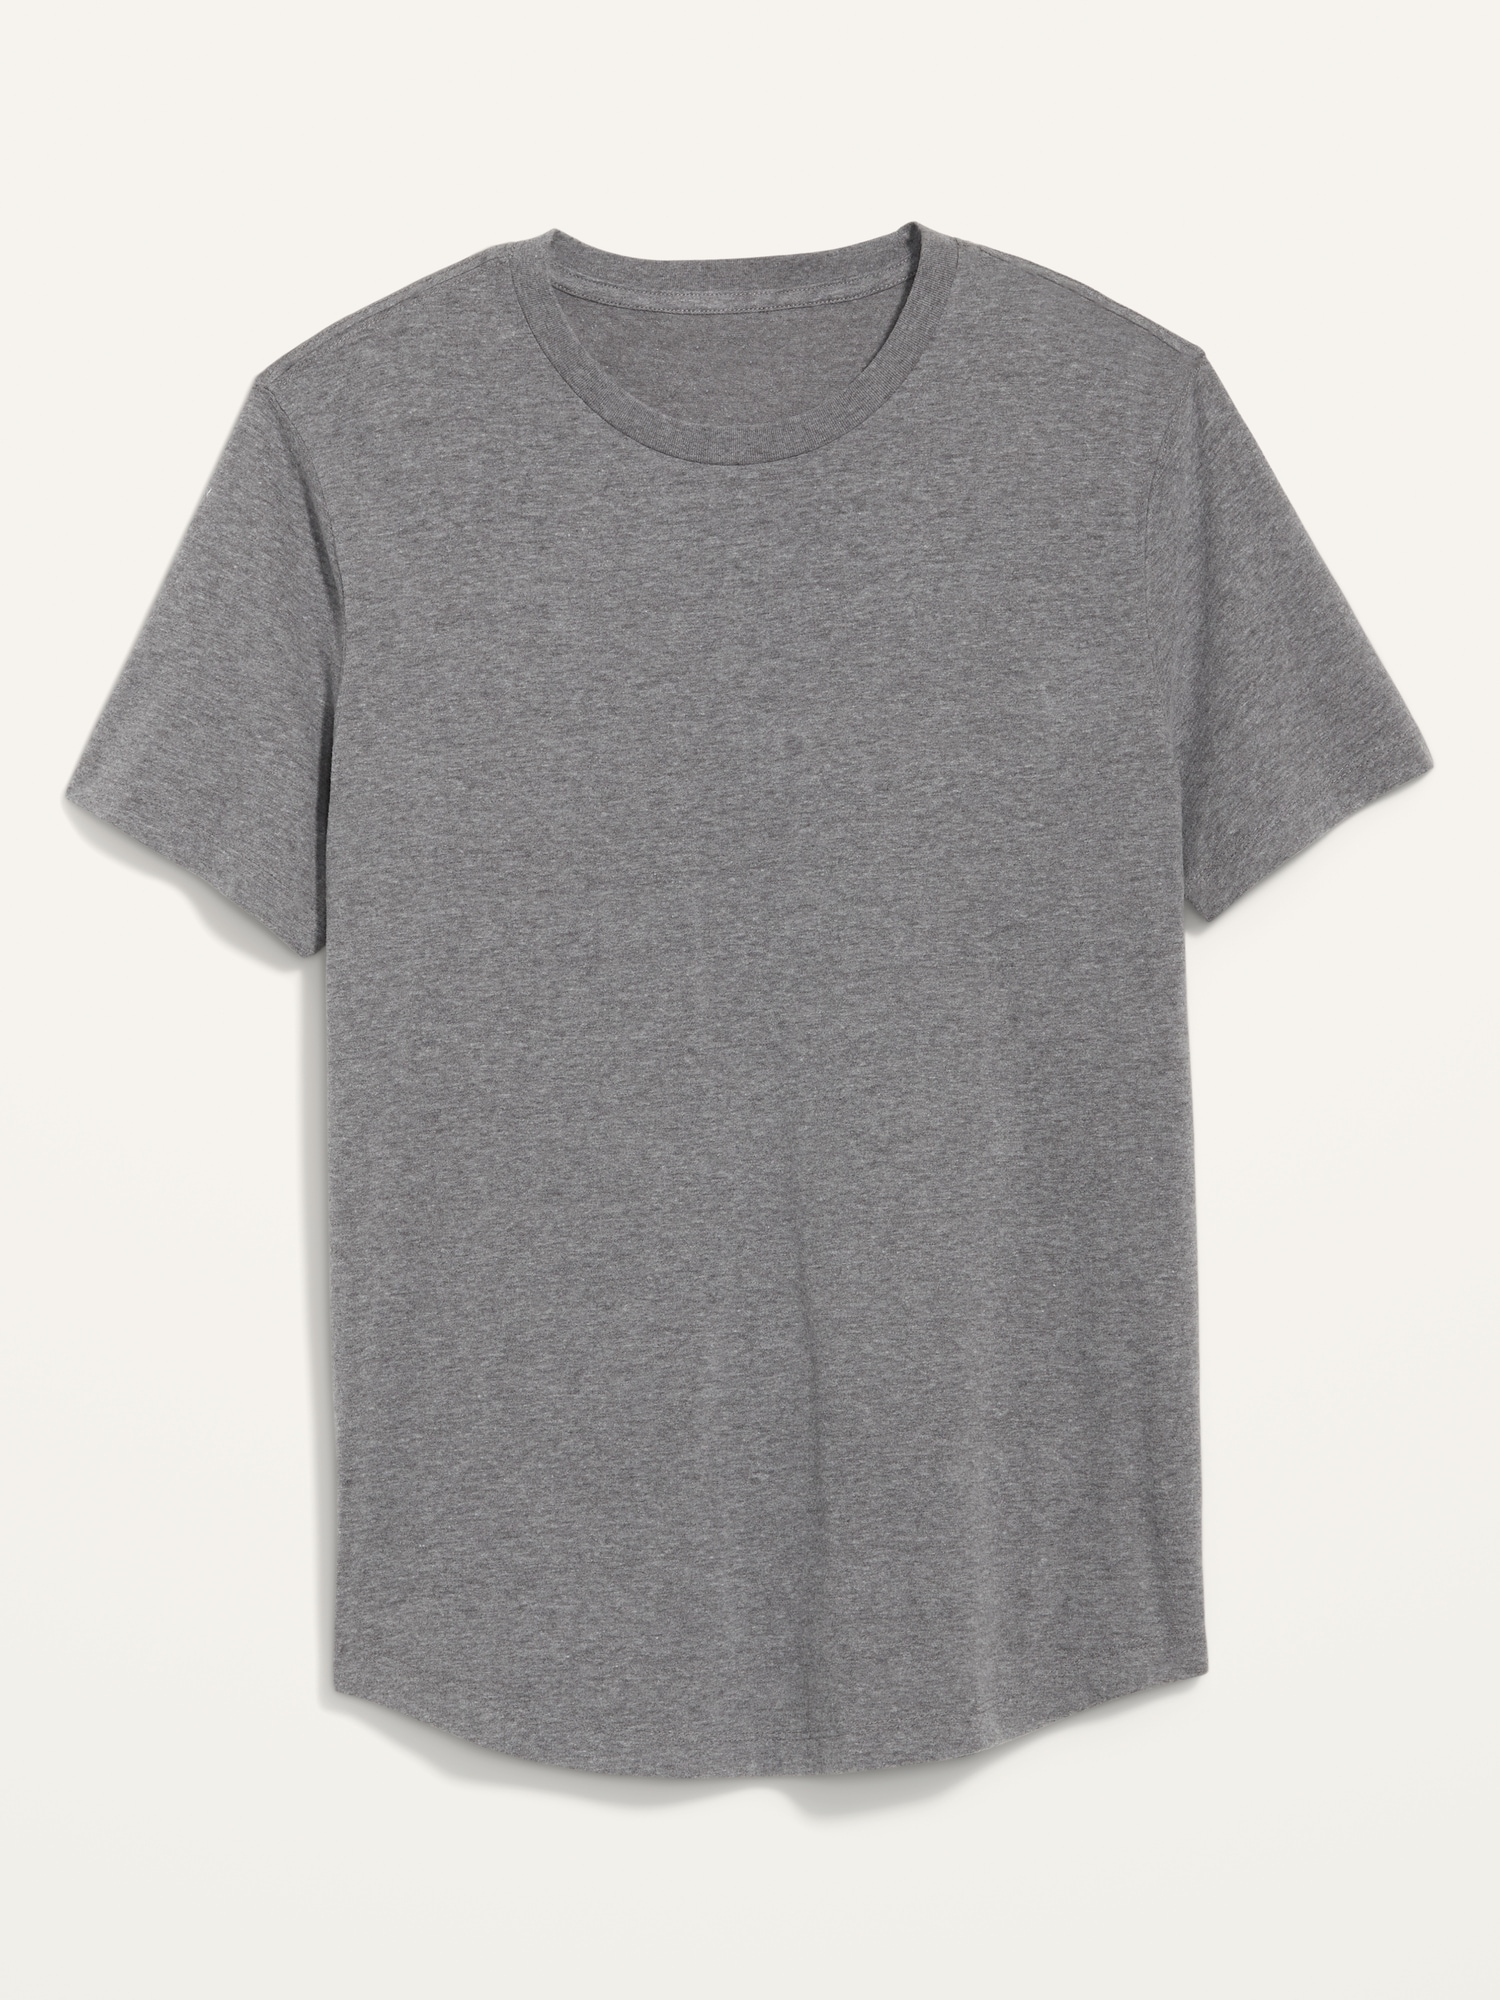 Old Navy Soft-Washed Curved-Hem T-Shirt for Men gray. 1